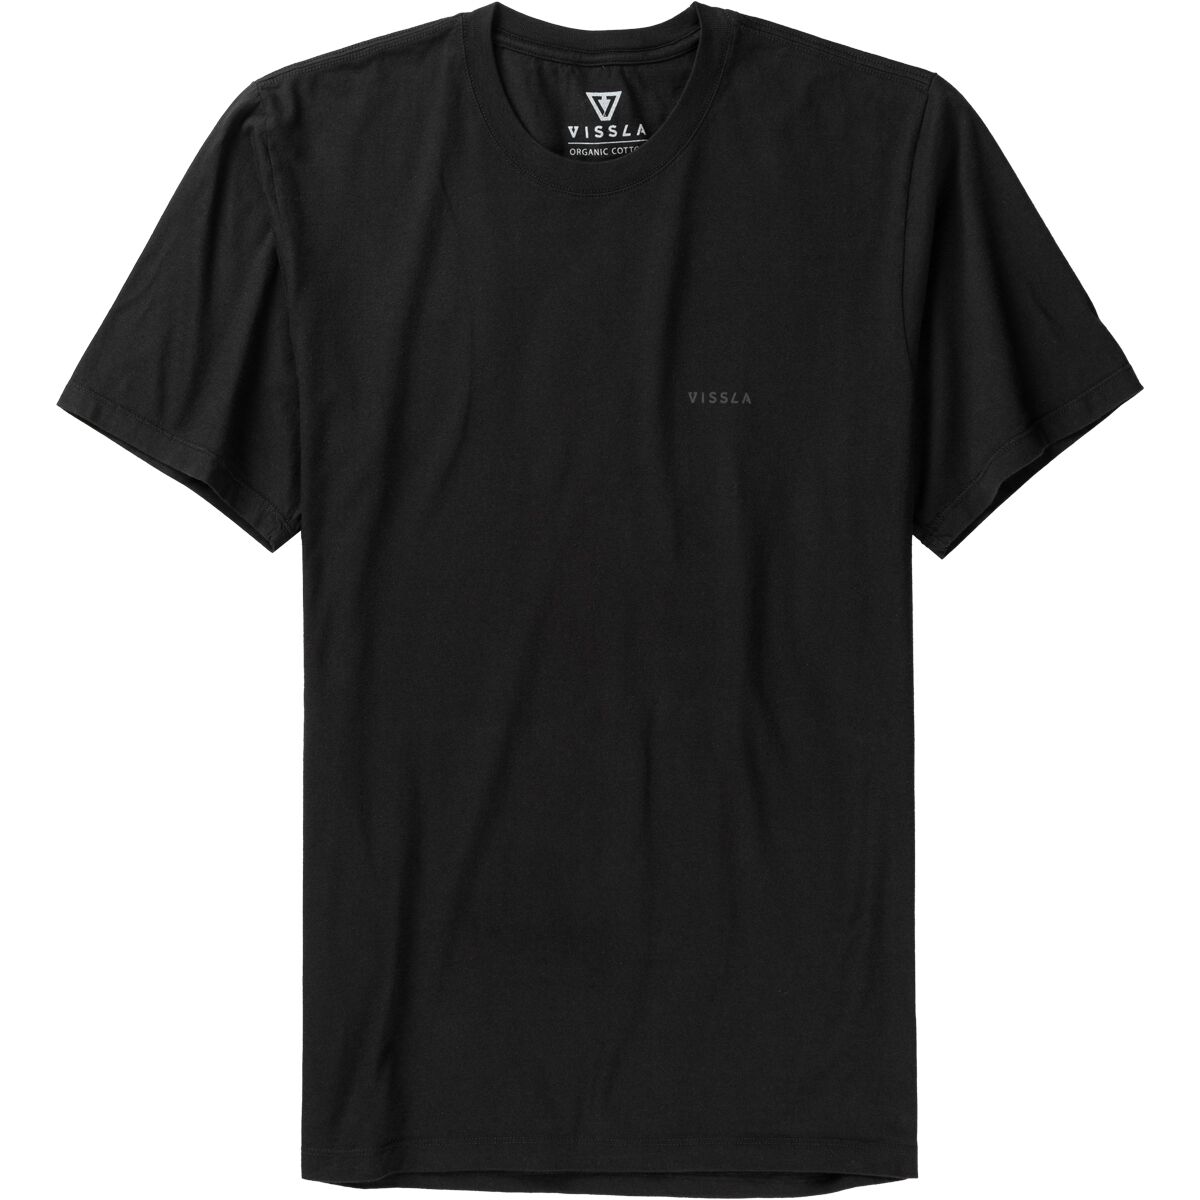 Vintage Vissla Premium T-Shirt - Men